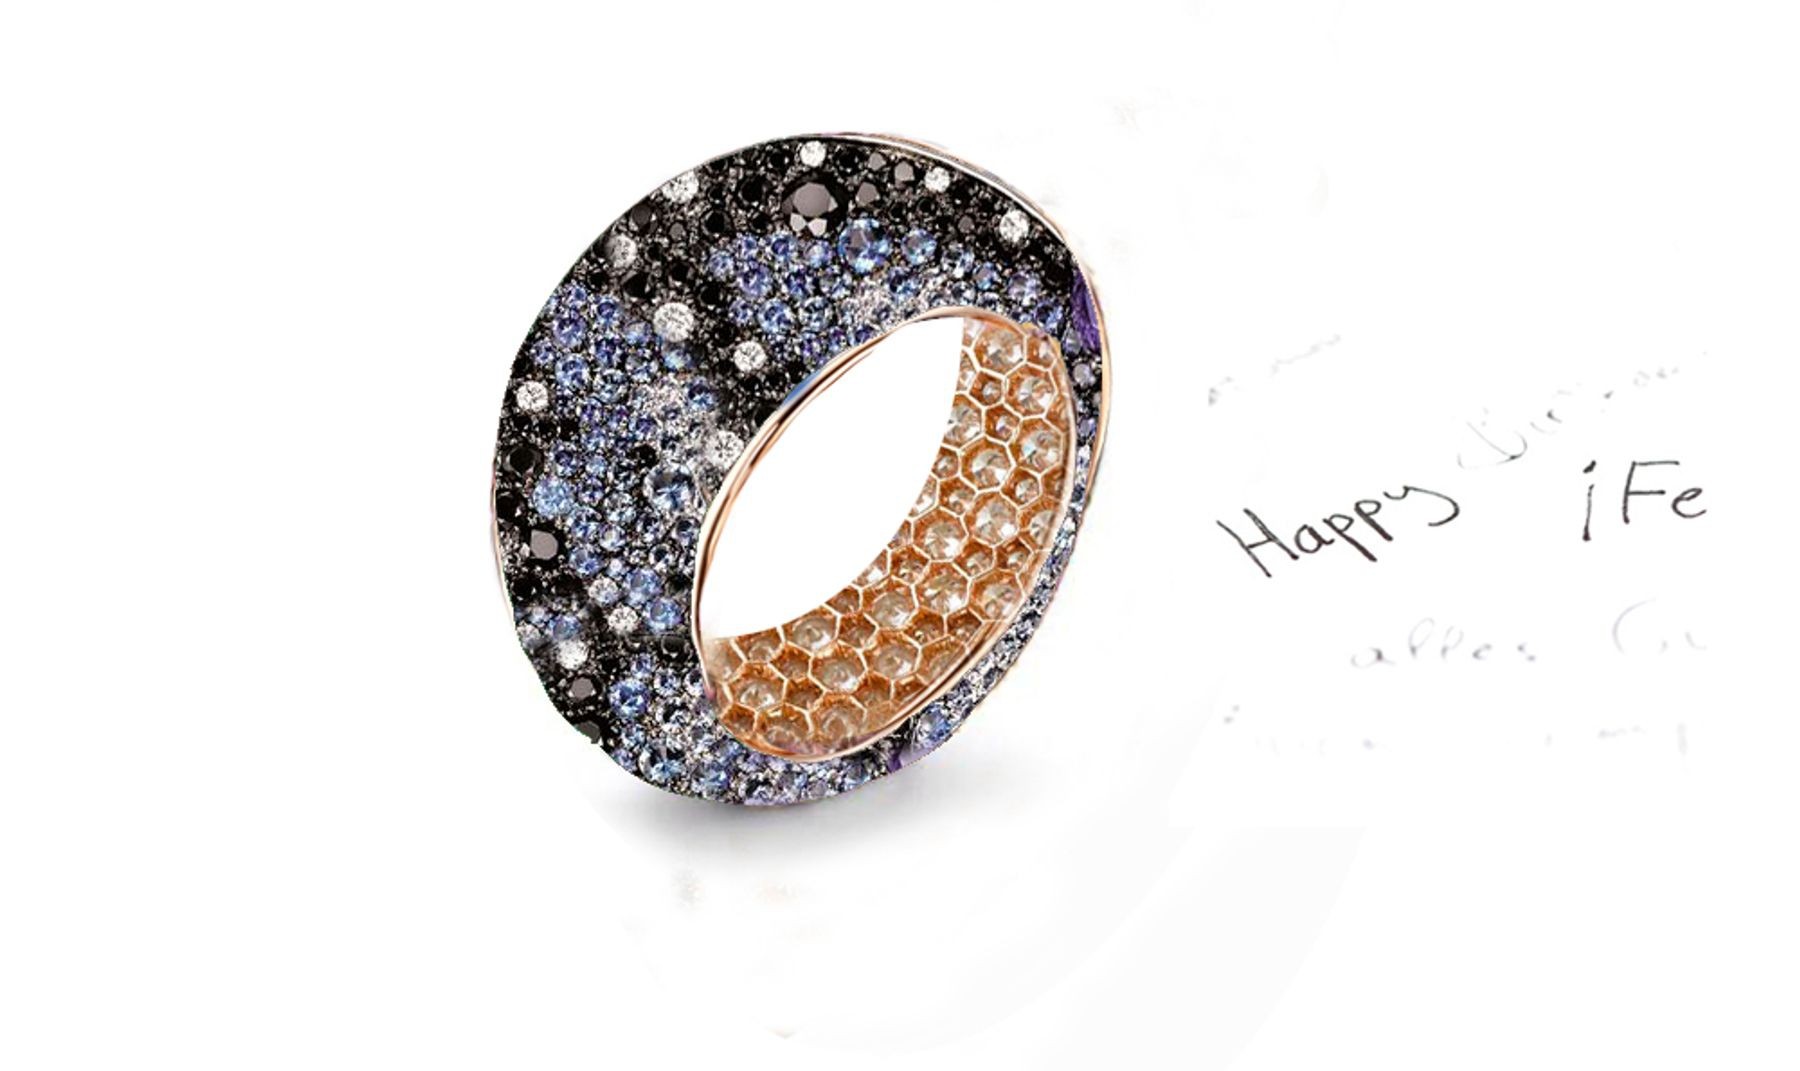 For Weddings or Anniversaries - Eternity Rings Featuring Diamonds & Rubies, Emeralds & Sapphires